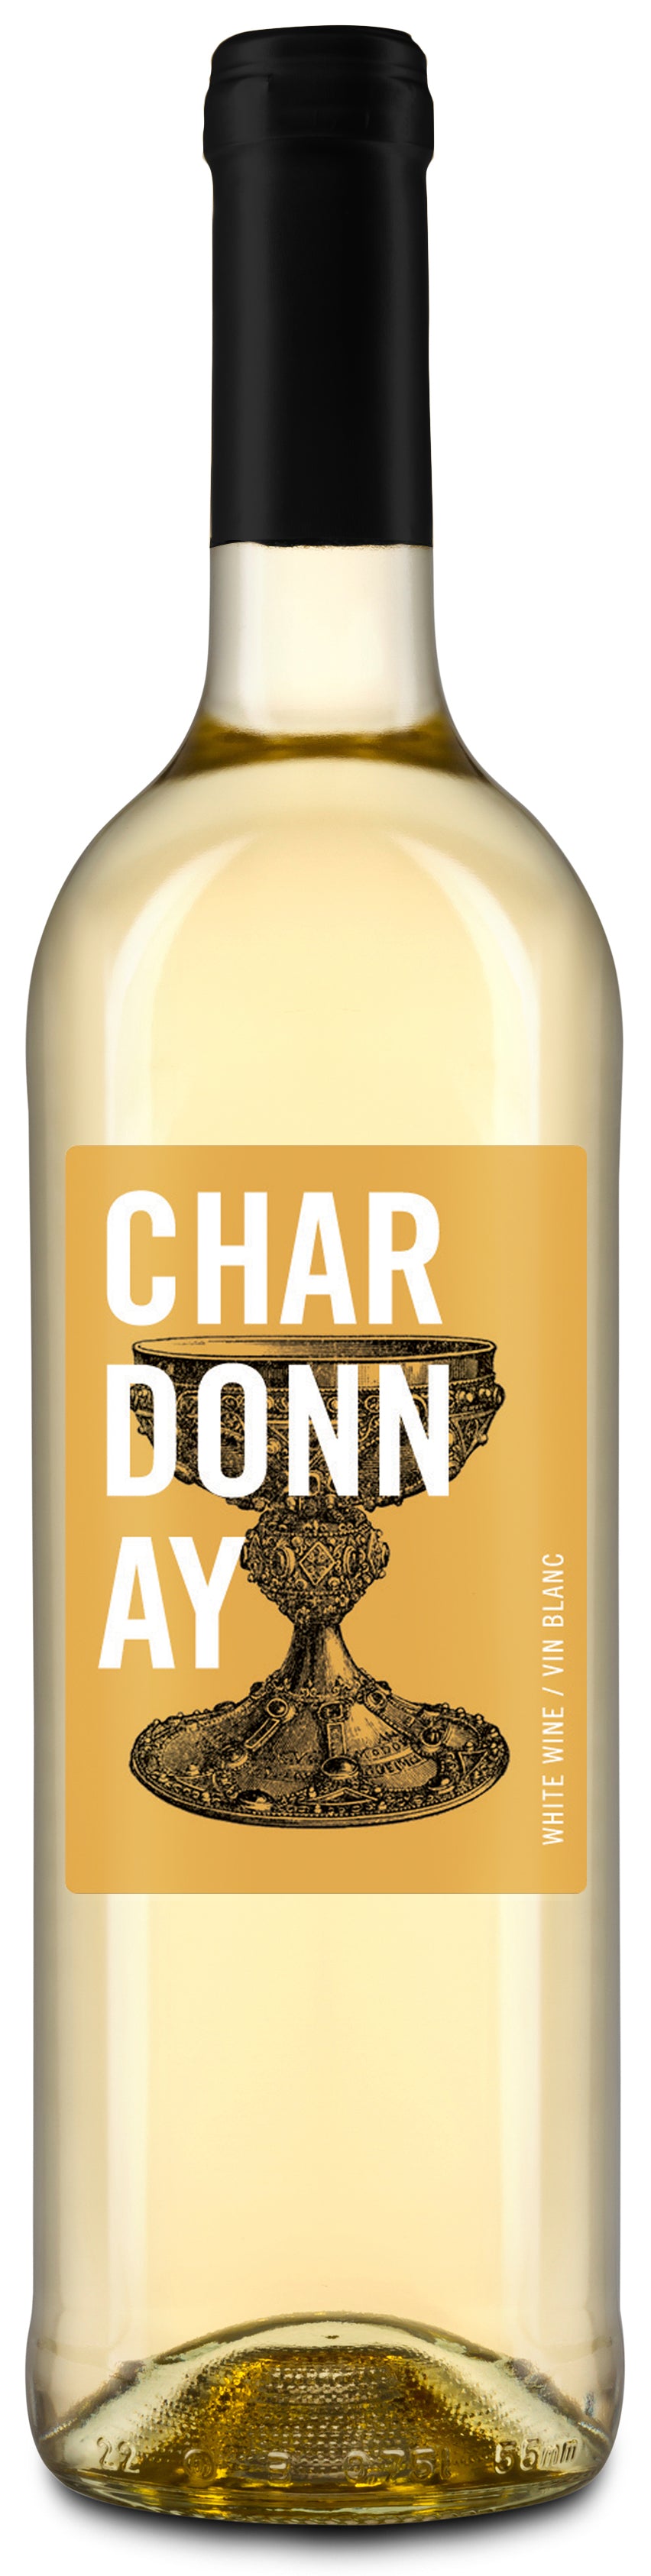 Labels - Chardonnay - GVI - The Wine Warehouse CA